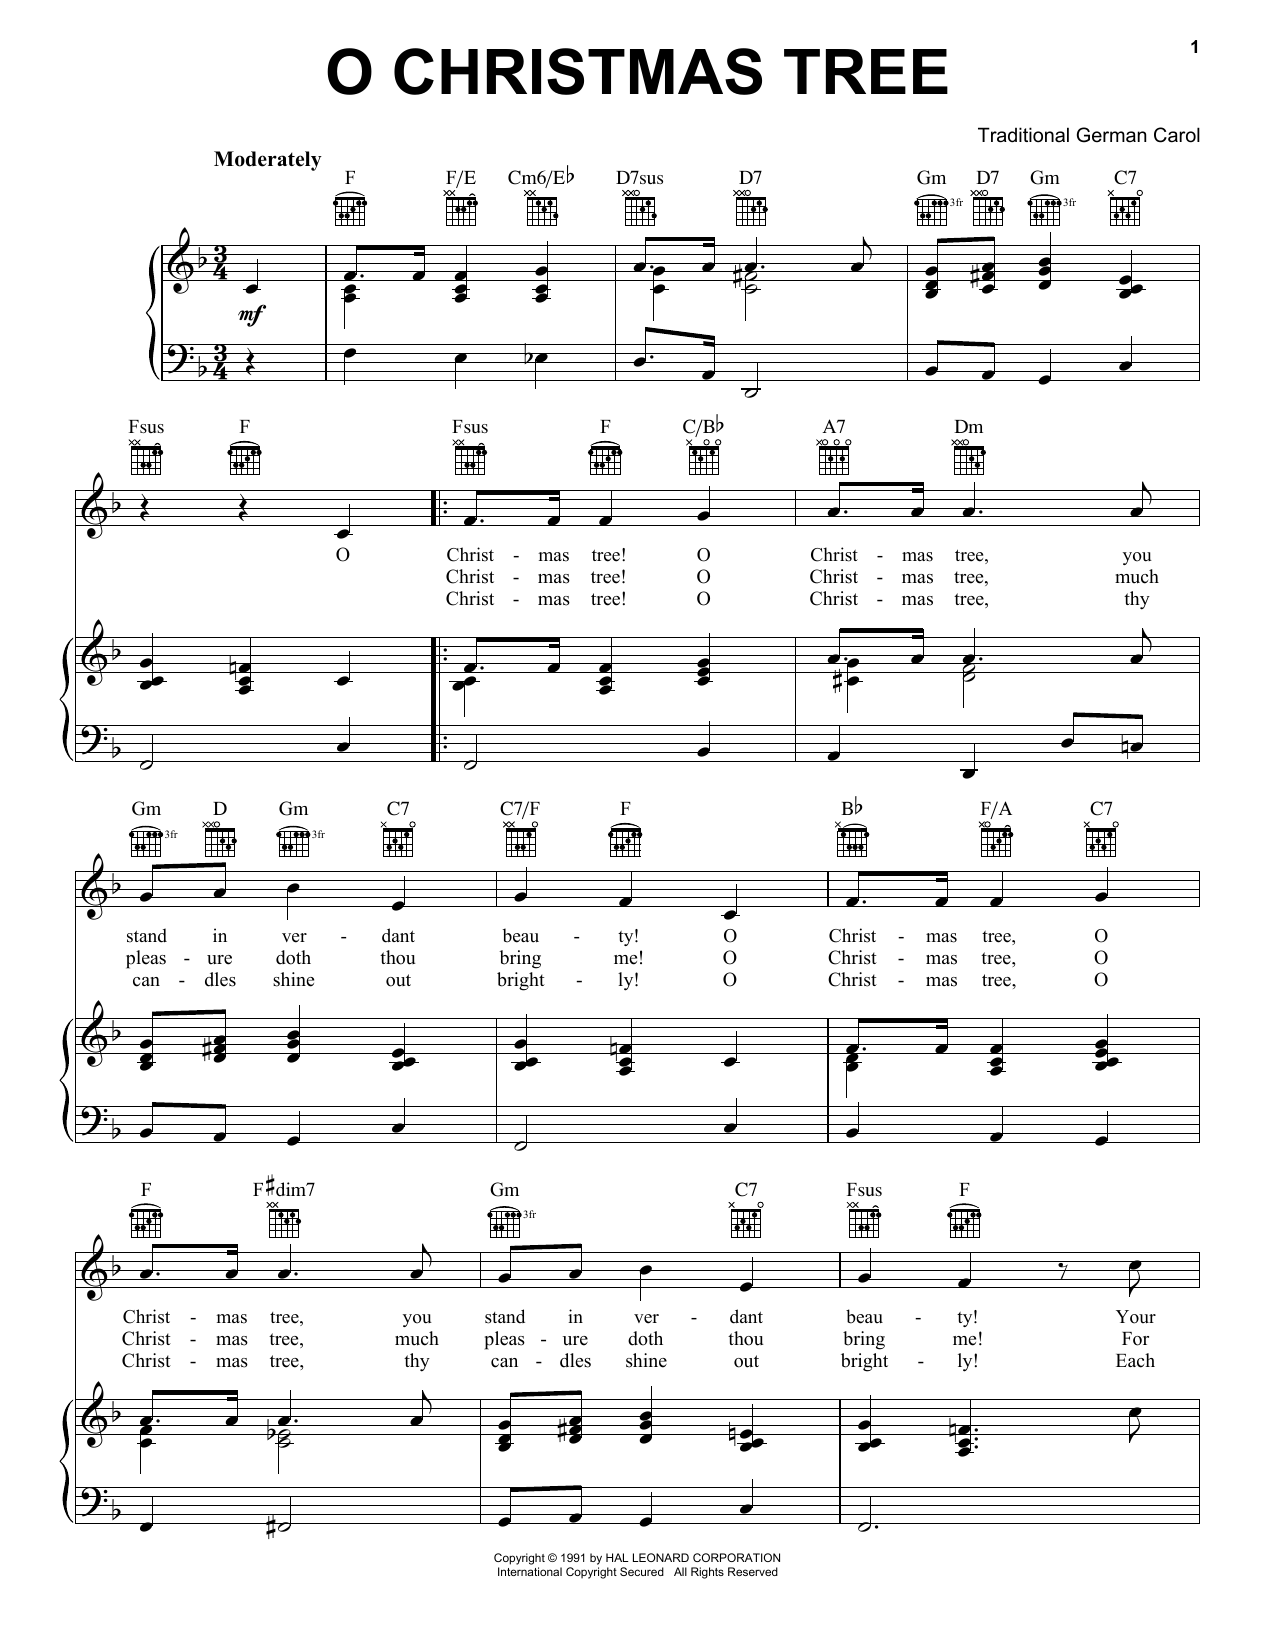 Christmas Carol O Christmas Tree Sheet Music Notes & Chords for Piano - Download or Print PDF